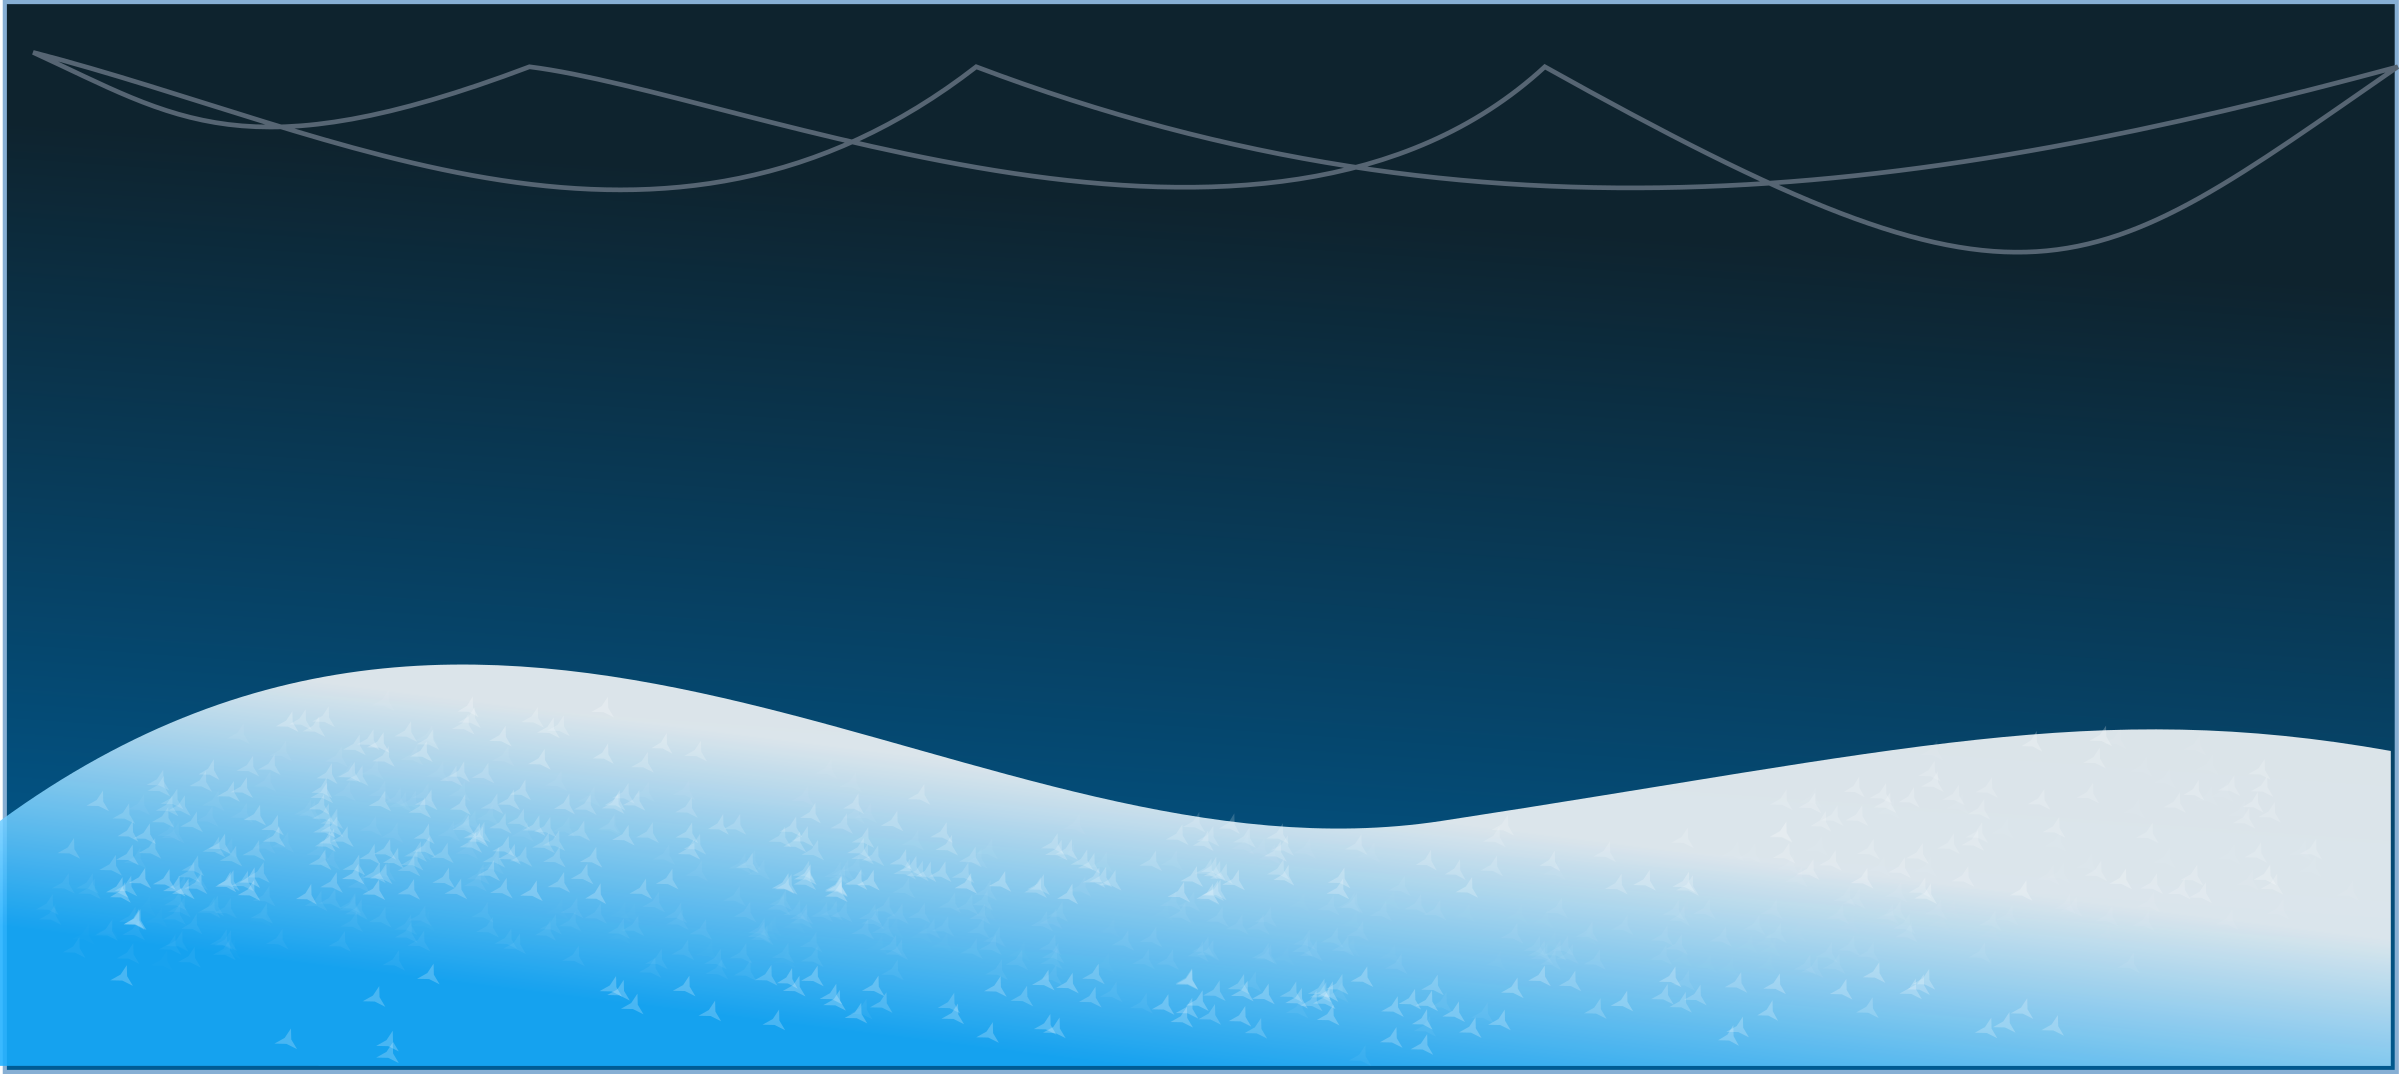 Download Landscape snow clipart 20 free Cliparts | Download images ...